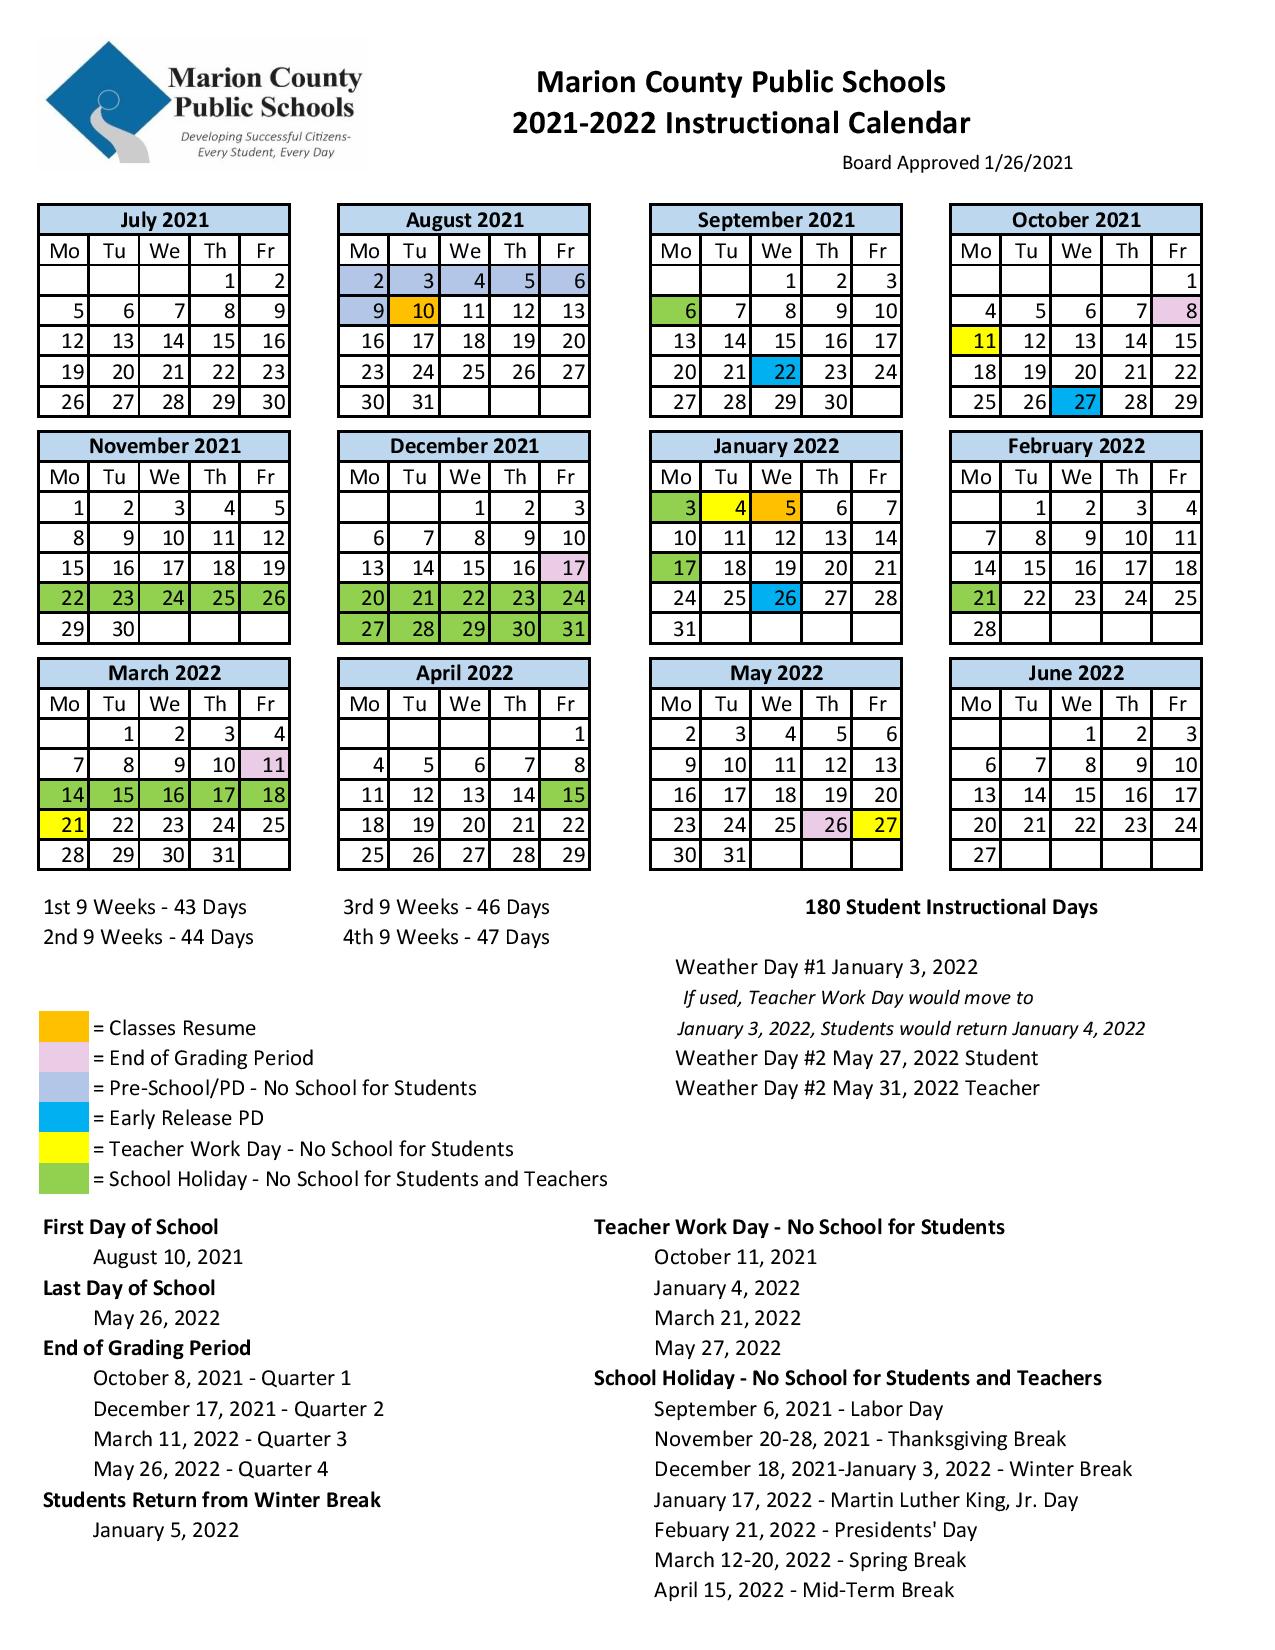 Mcps Calendar 2022 2023 Marion County Public Schools Calendar 2021-2022